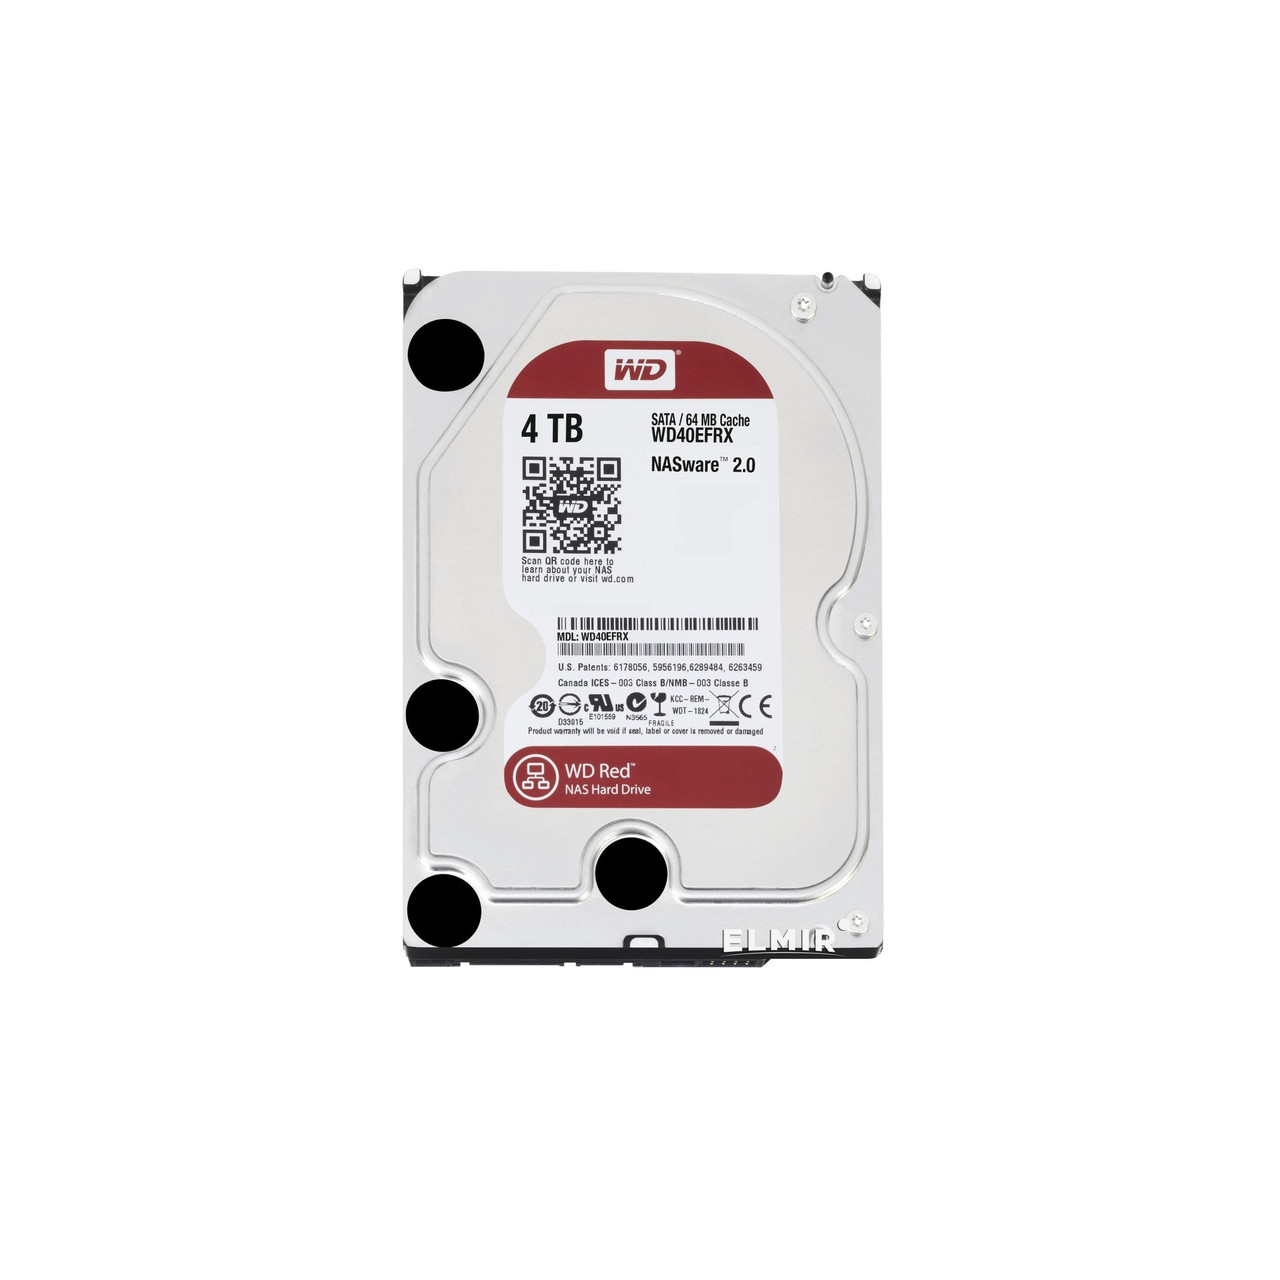 Жесткий диск внутренний Western Digital (WD) WD Red WD40EFRX (4Тб (4000Гб), HDD, 3,5″, Для систем хранения